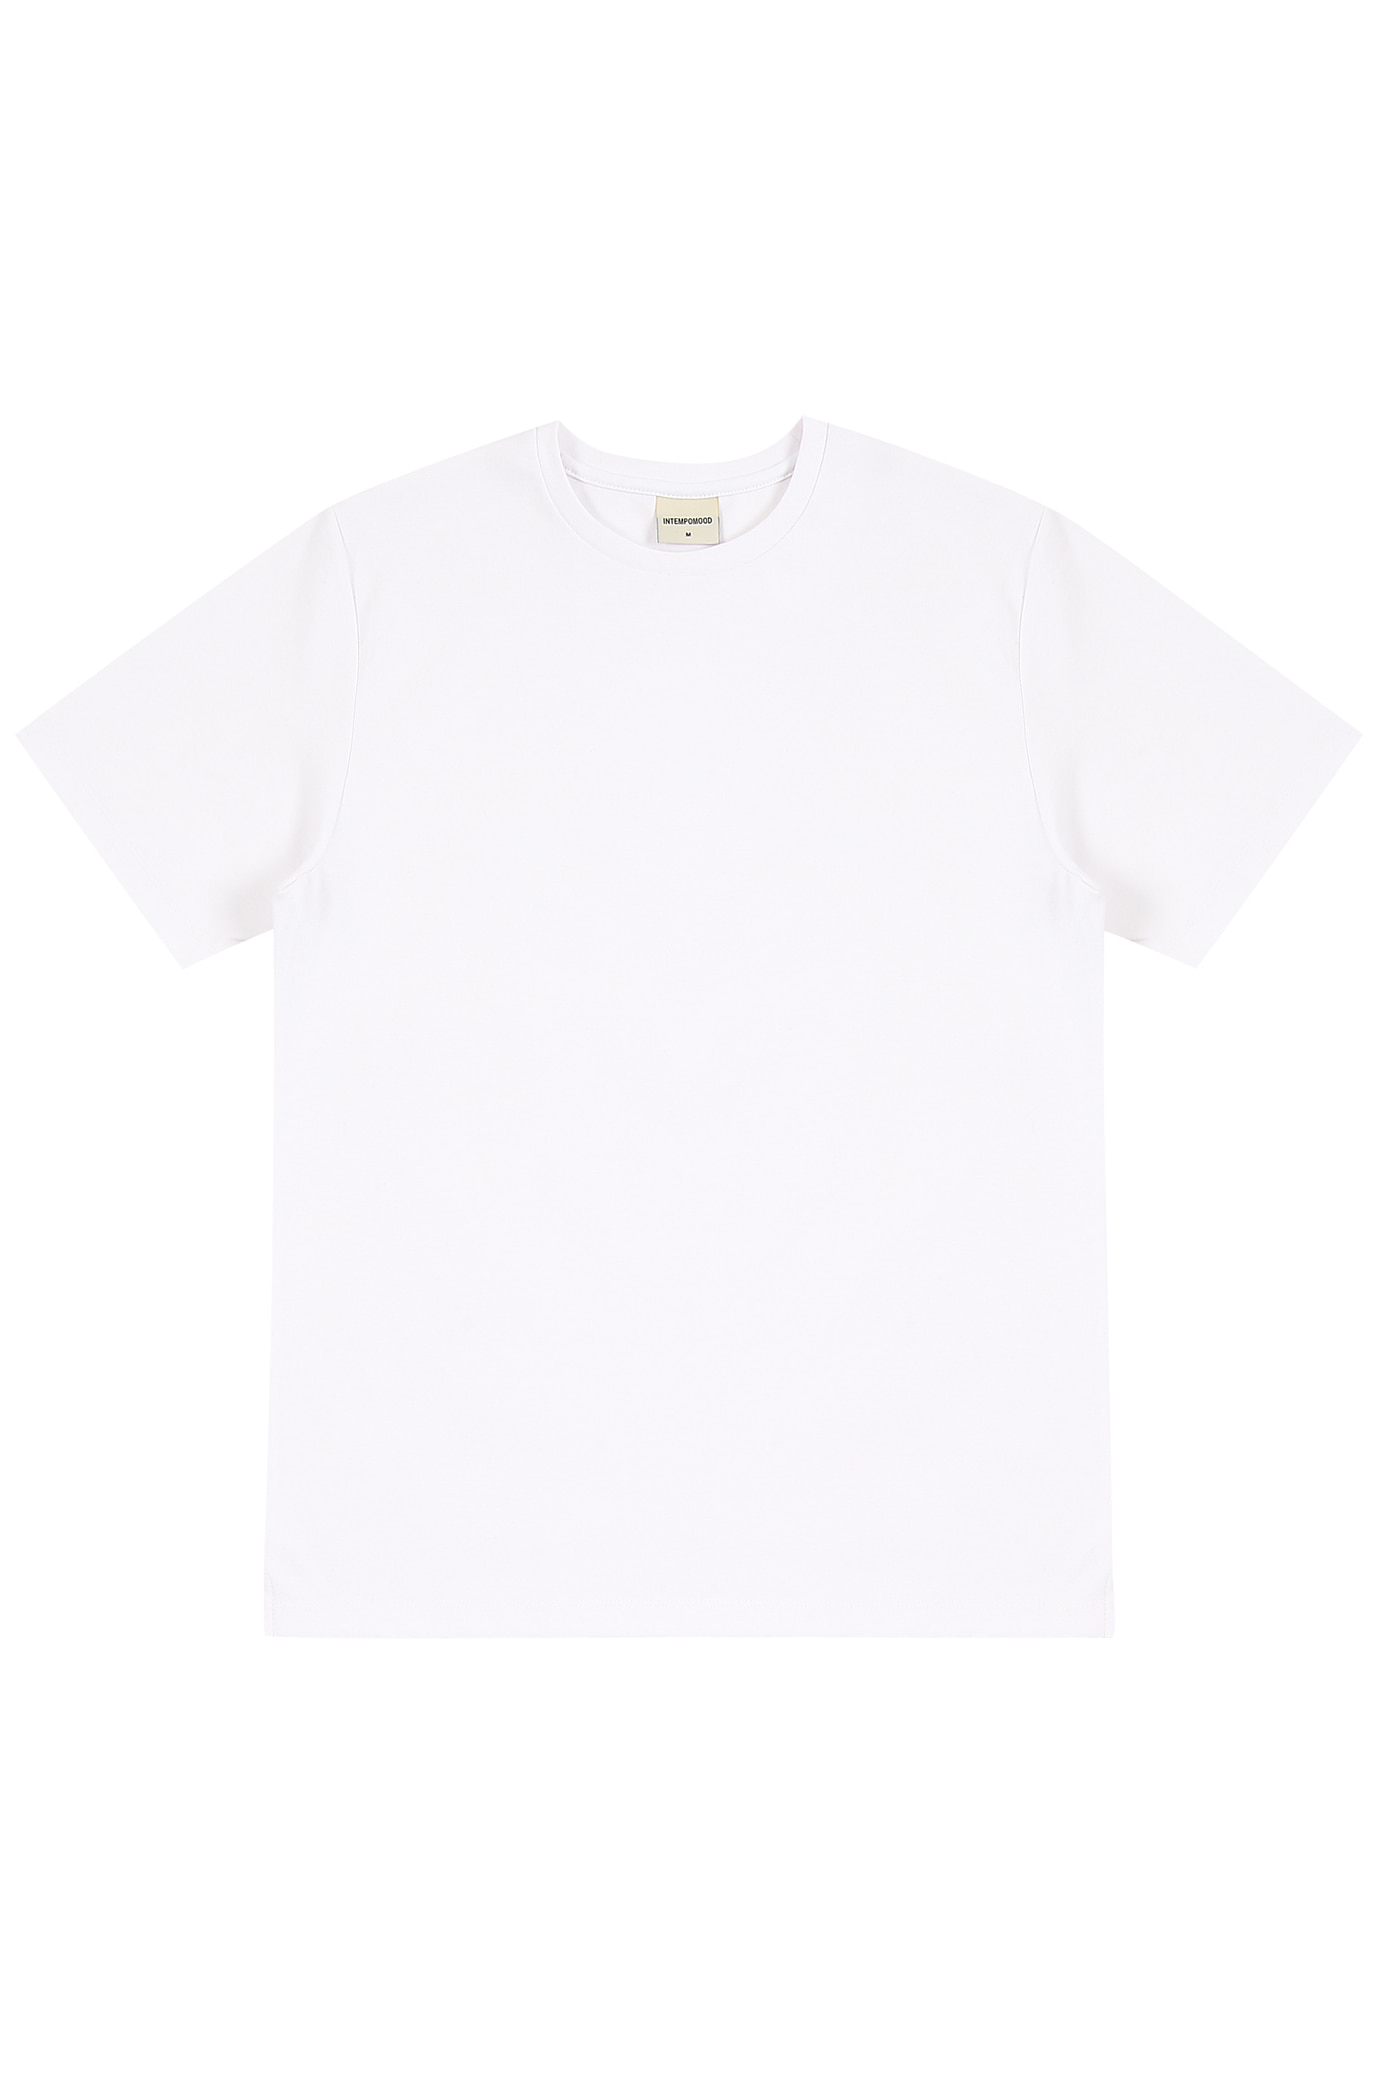 Signature Film Logo T-shirt_White